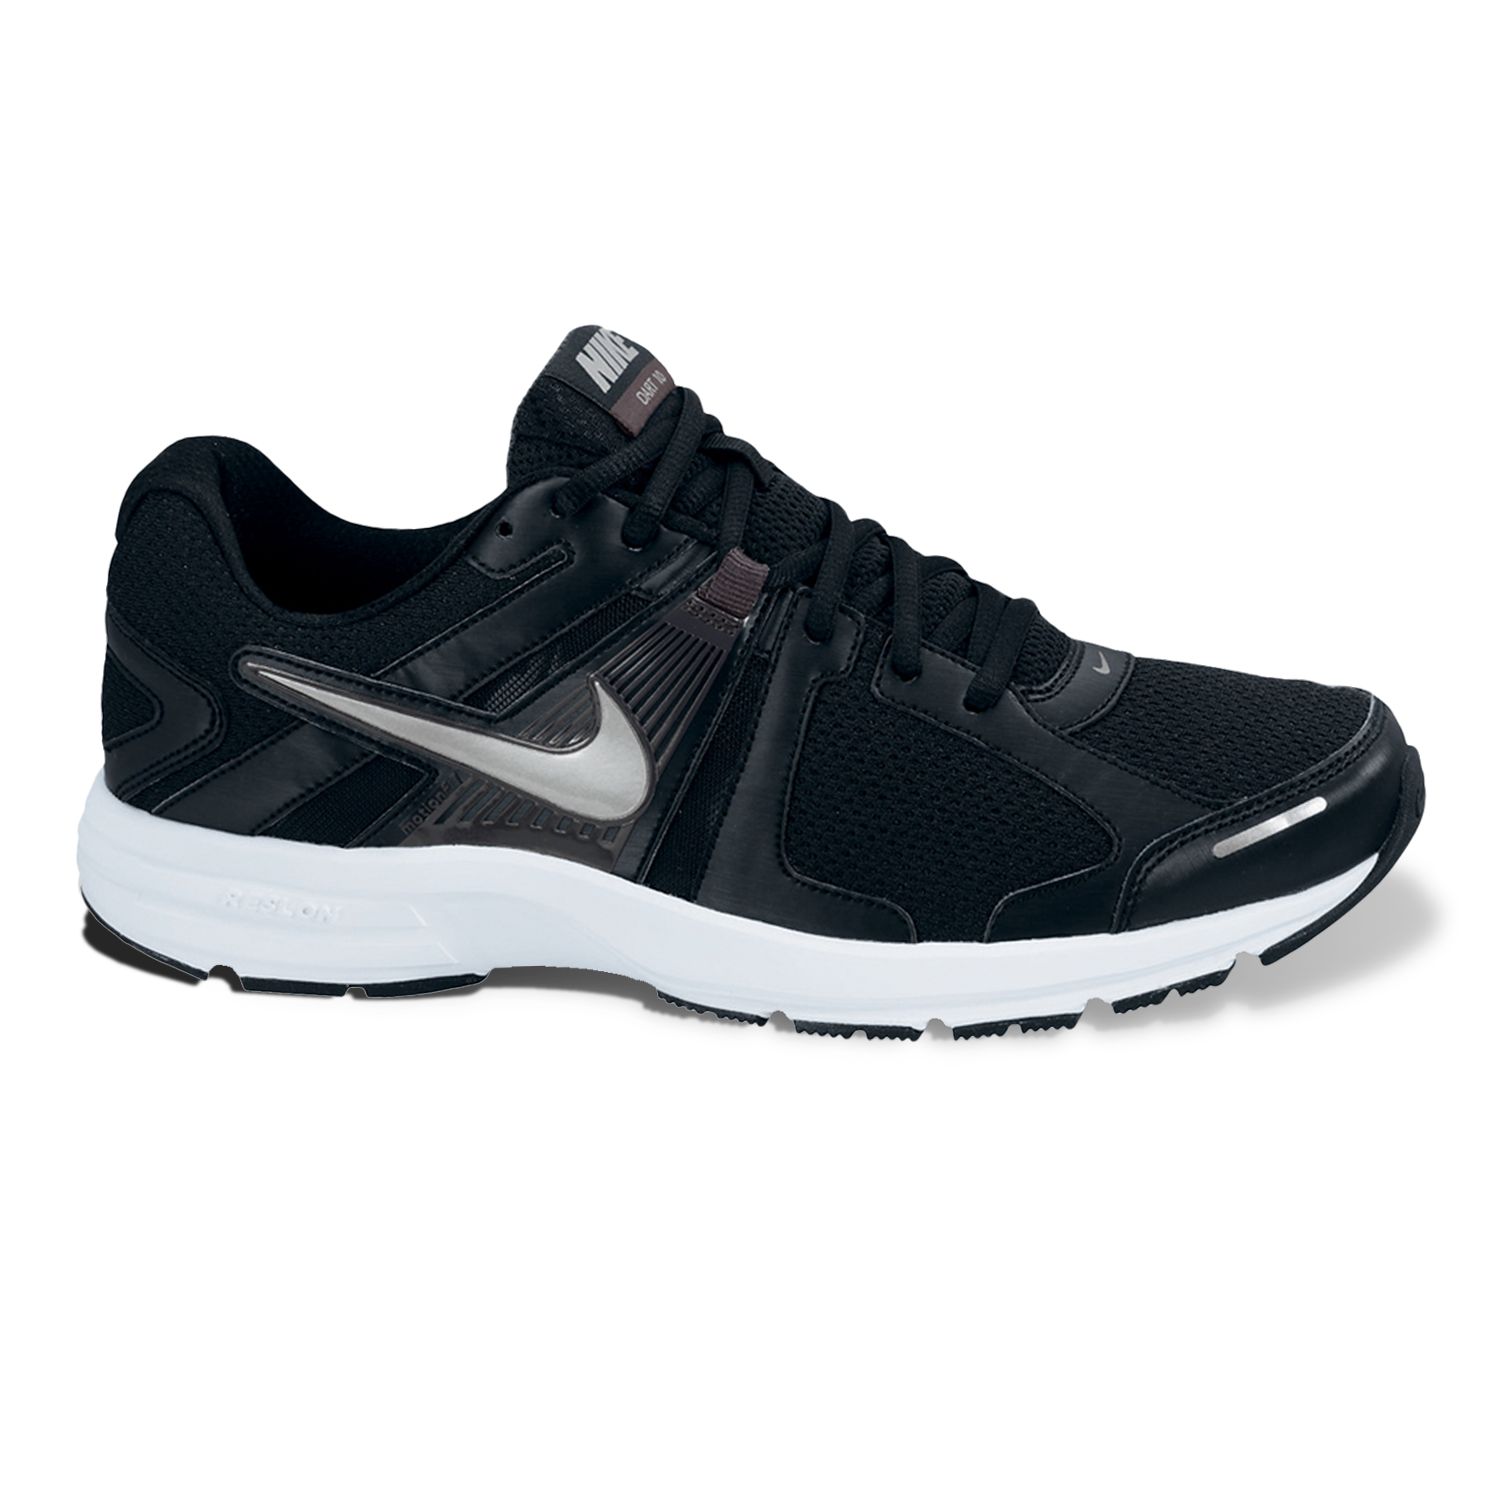 Nike Dart 10 Extra Wide Running Shoes - Men